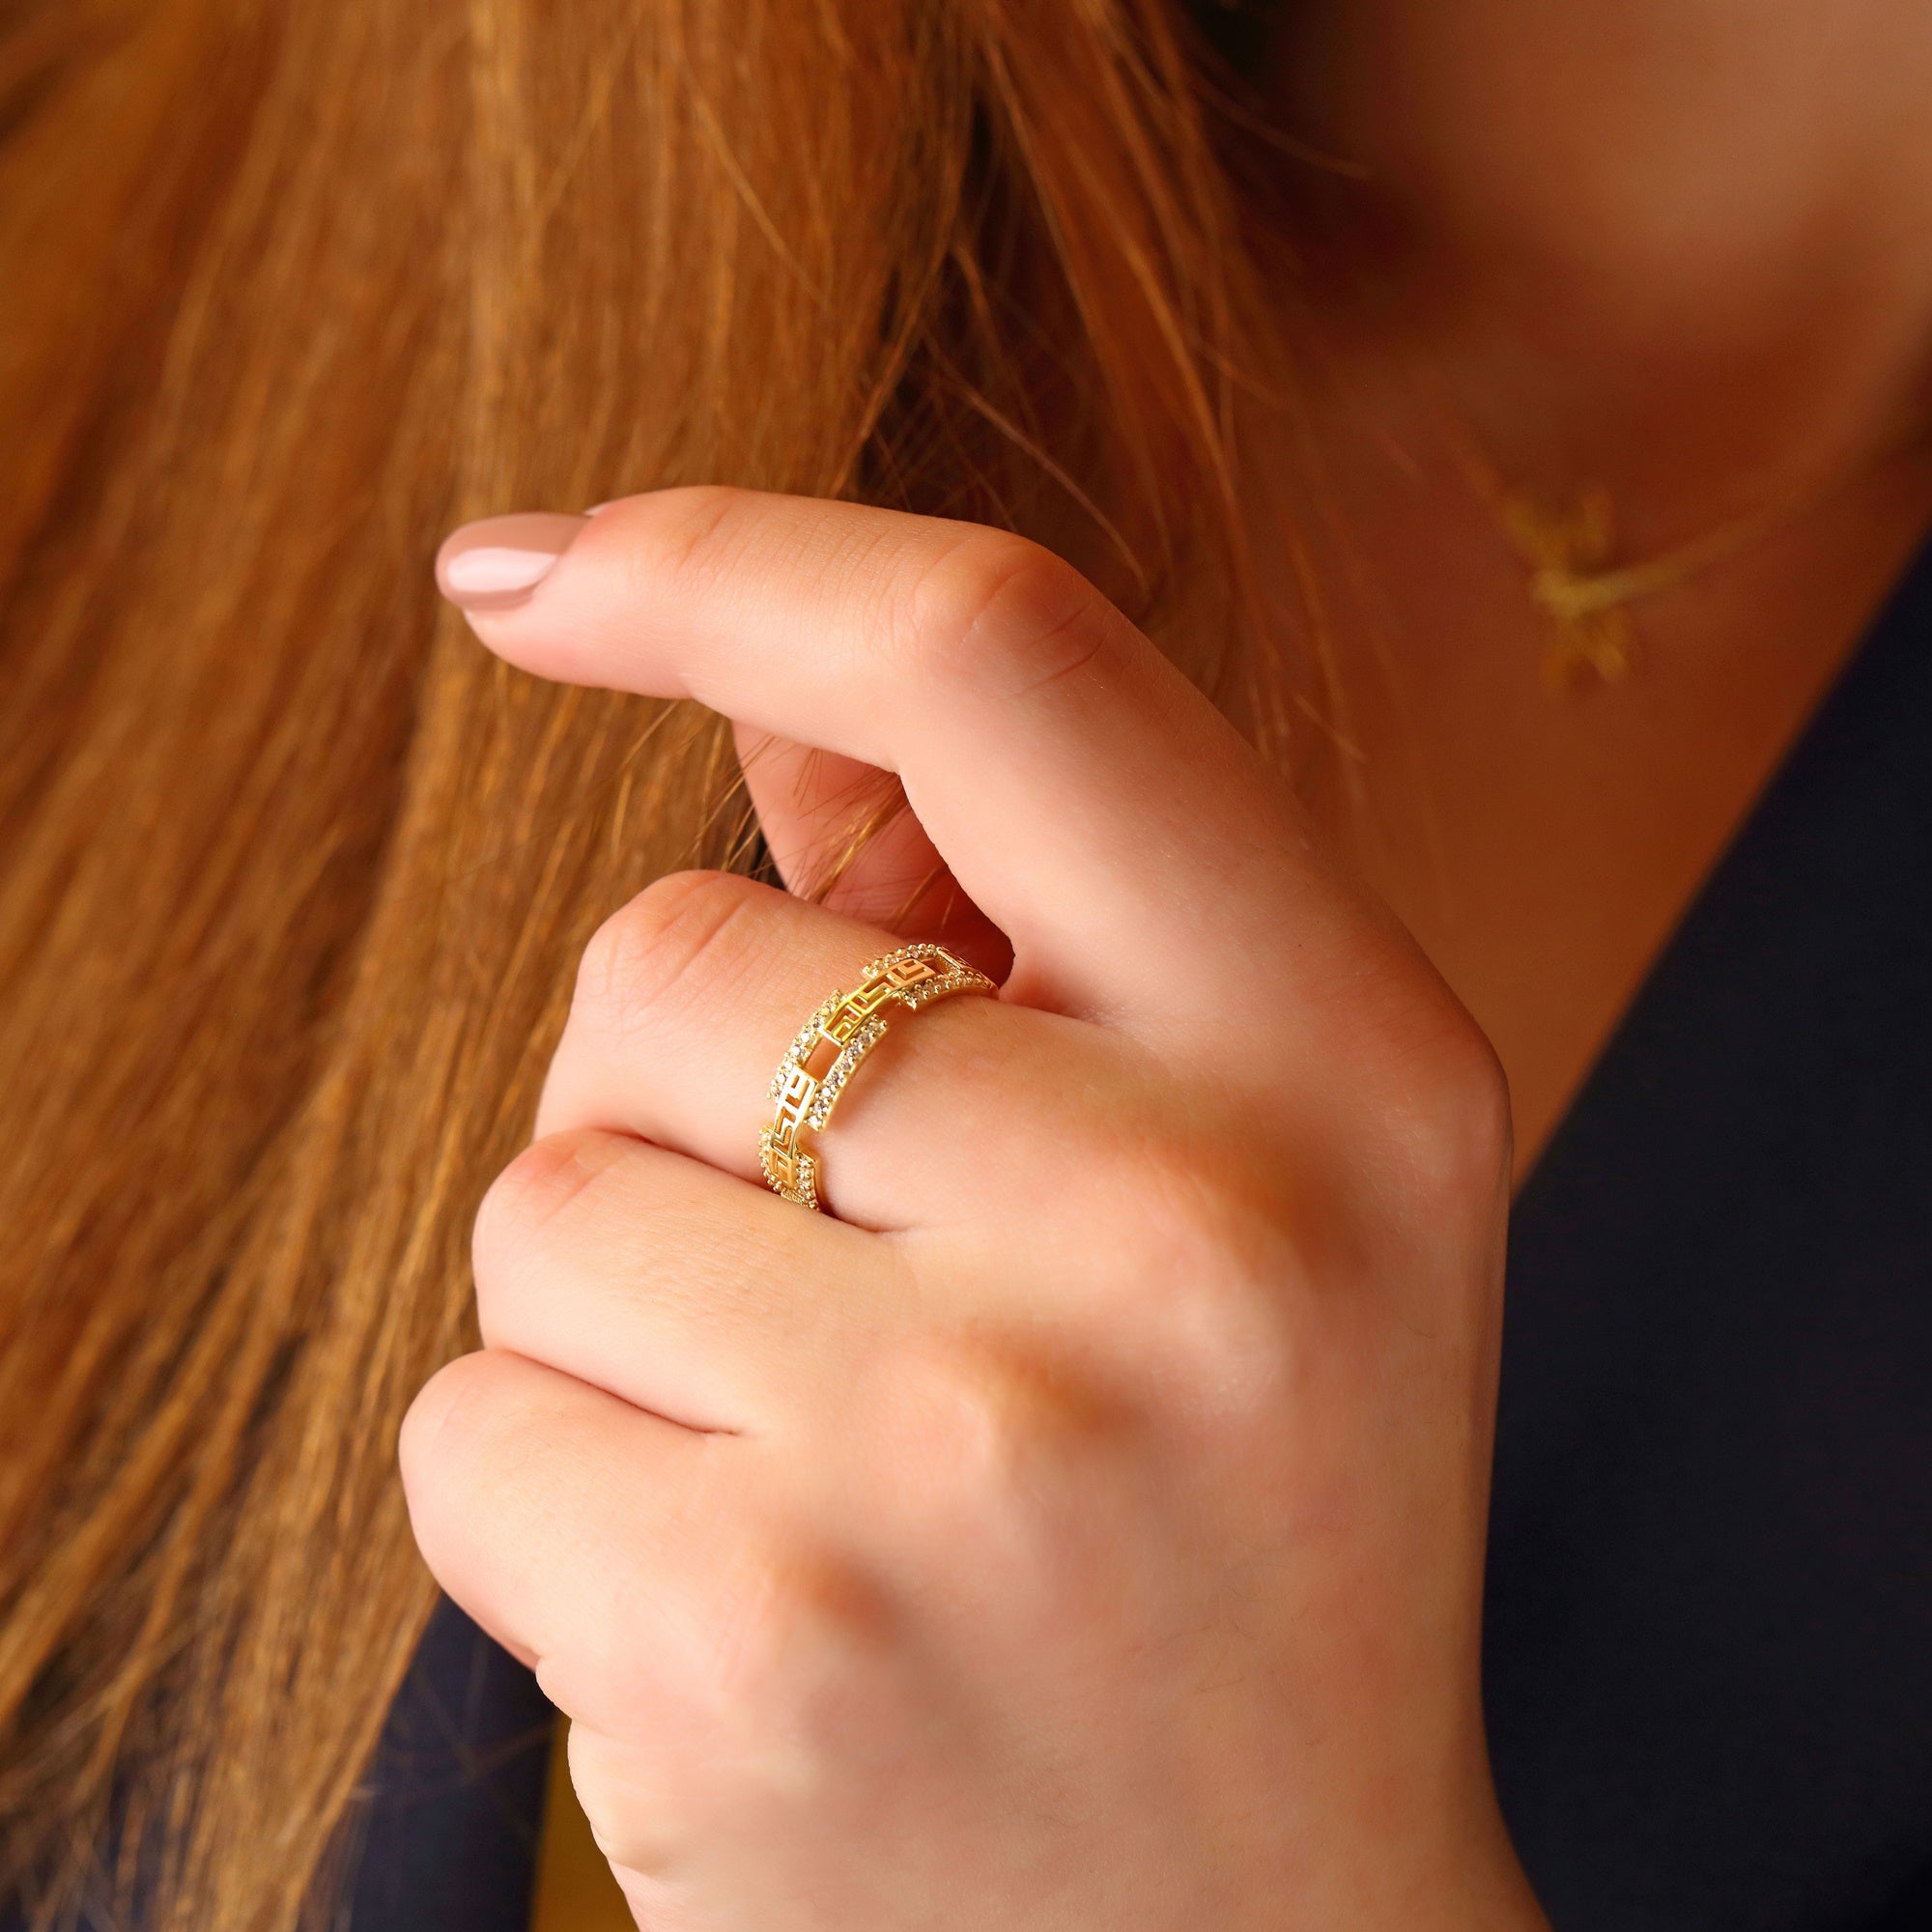 Ancient Greek Key Ring with Diamonds, Minimalist Women Ring with White Zircon Gems